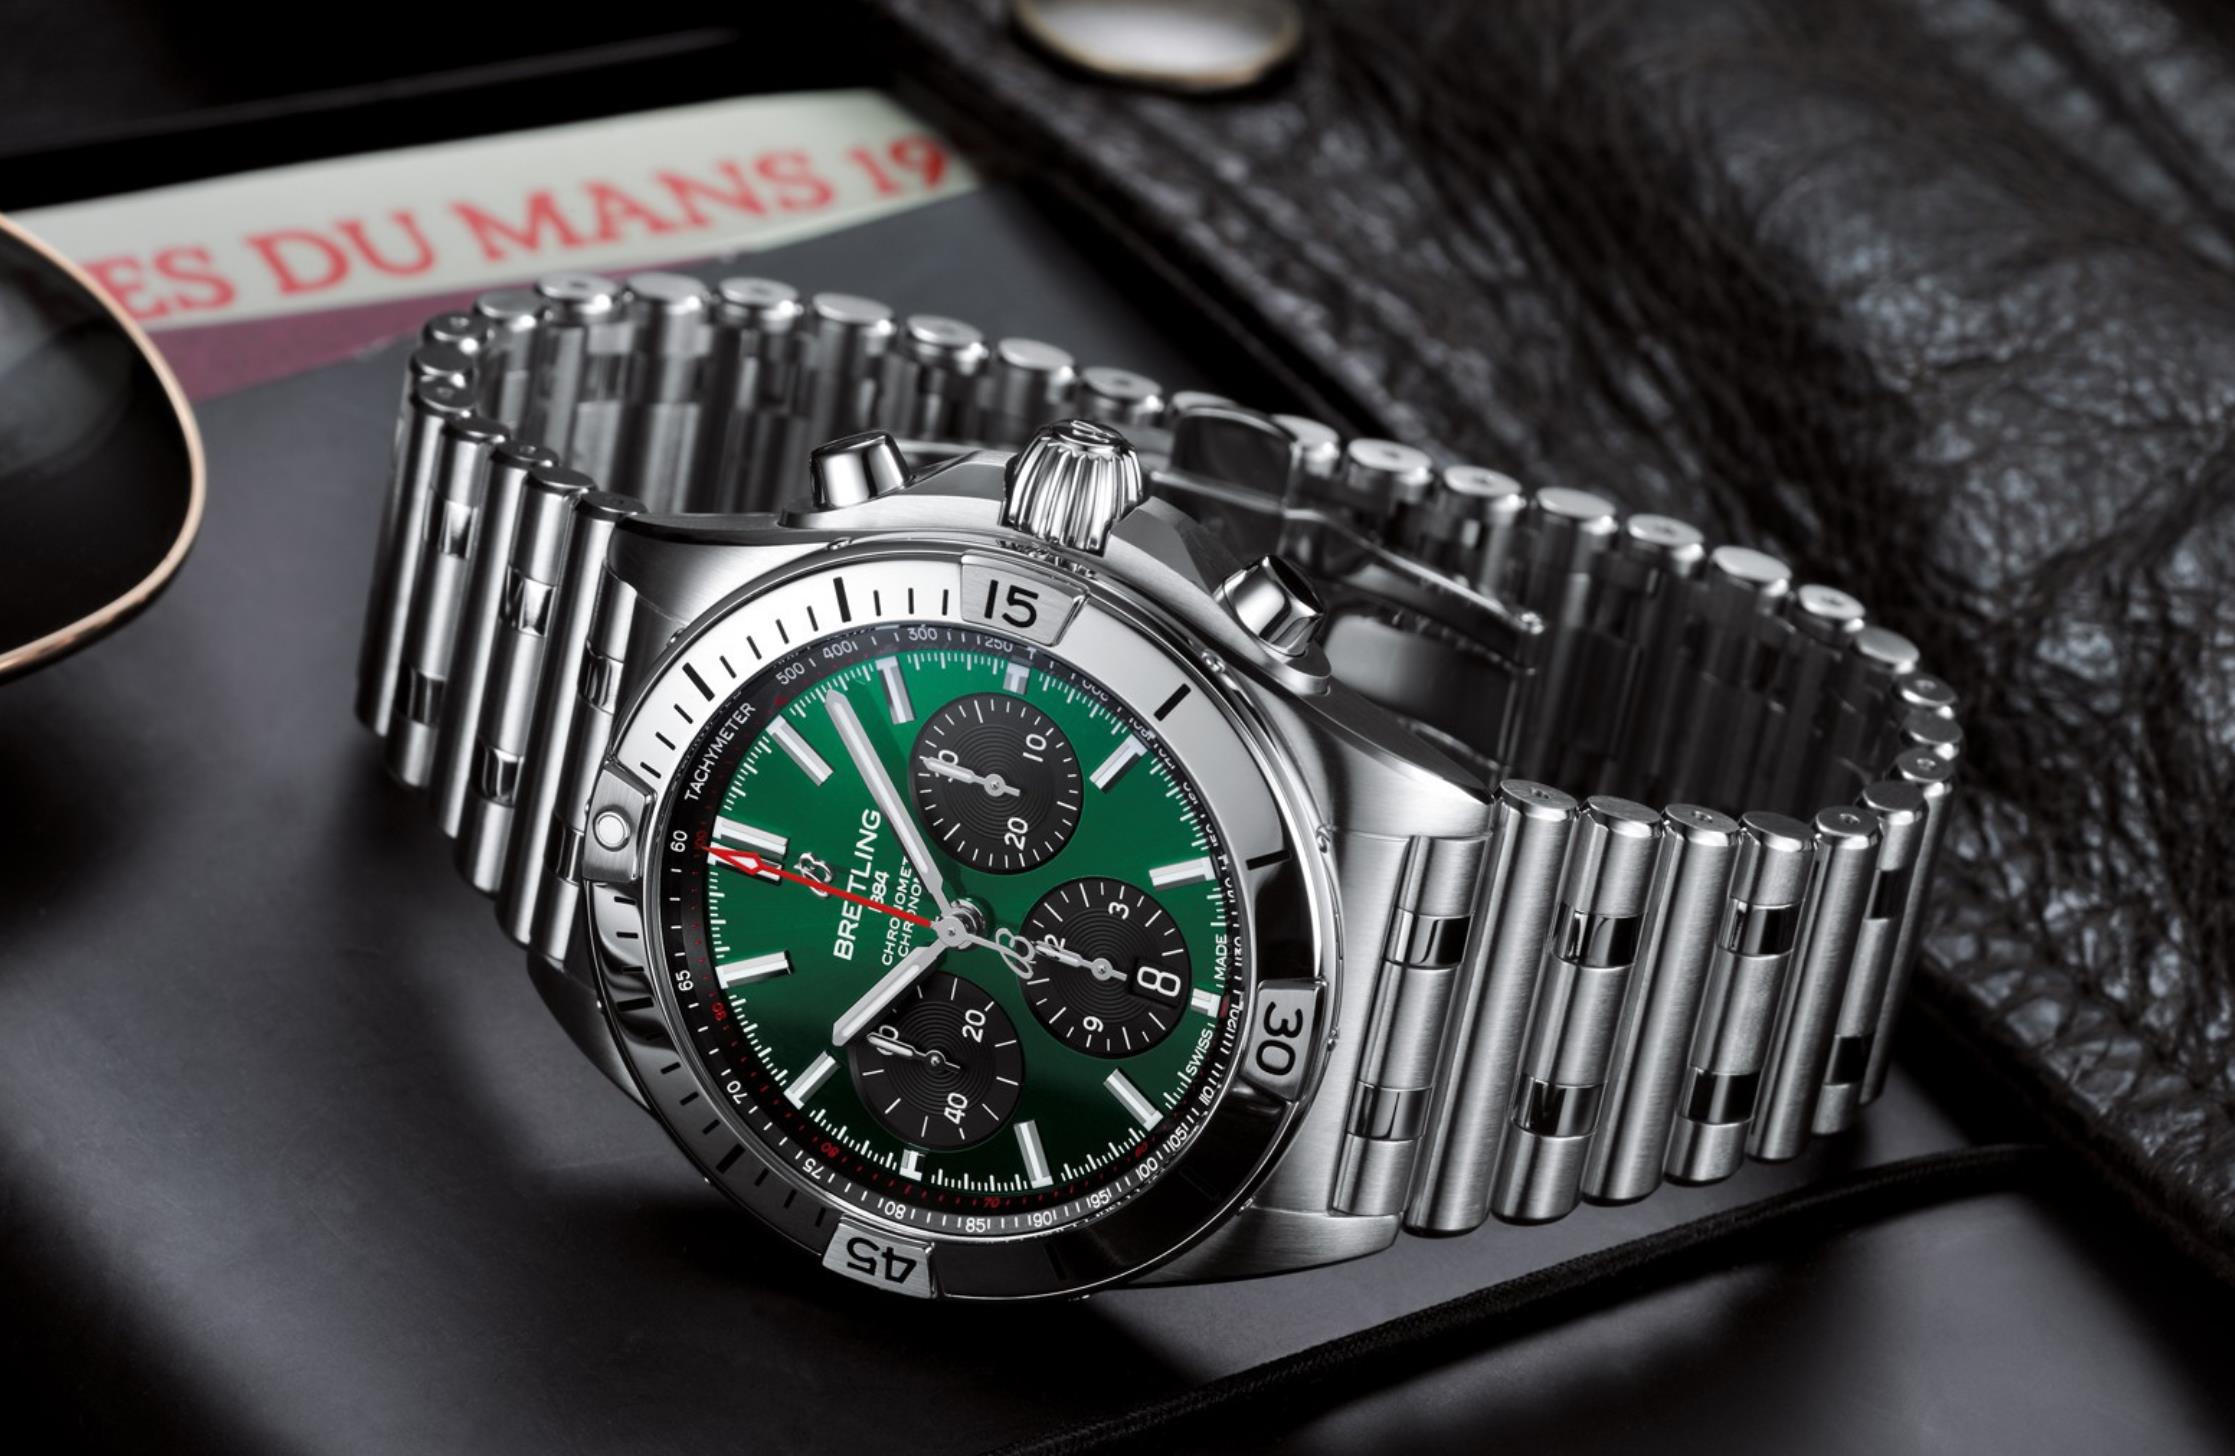 The stainless steel fake watch is waterproof.